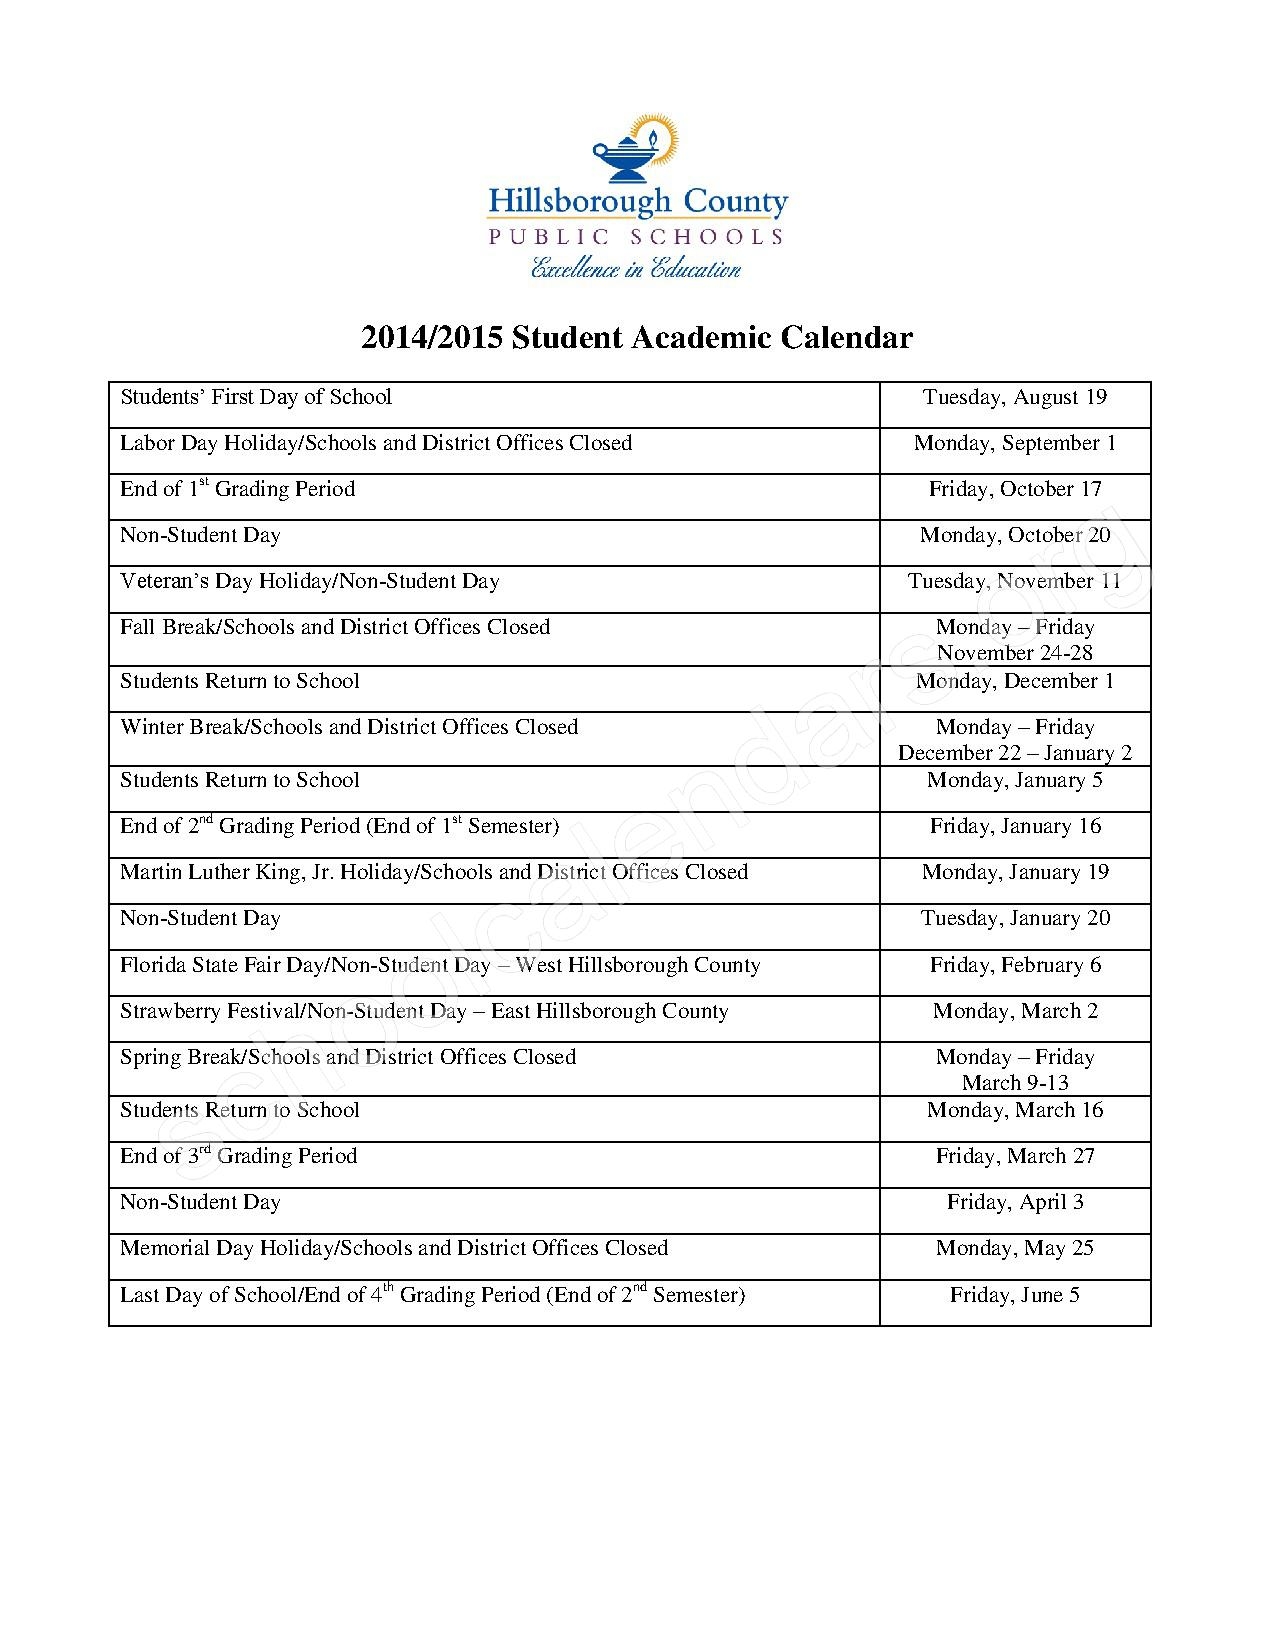 Hillsborough County Schools Calendar